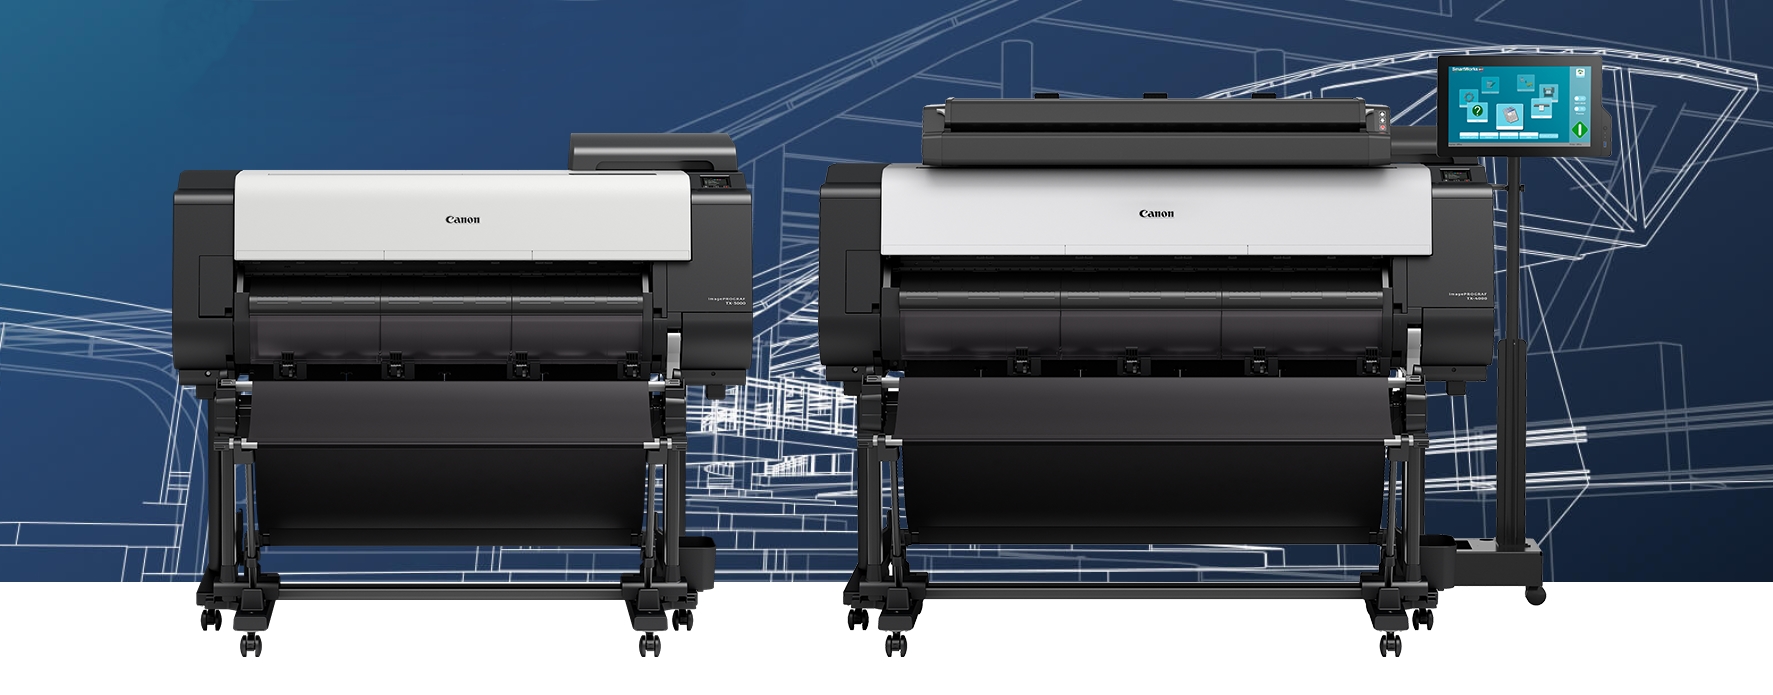 Canon TX Series Plotter Printers & Multifunction Printers